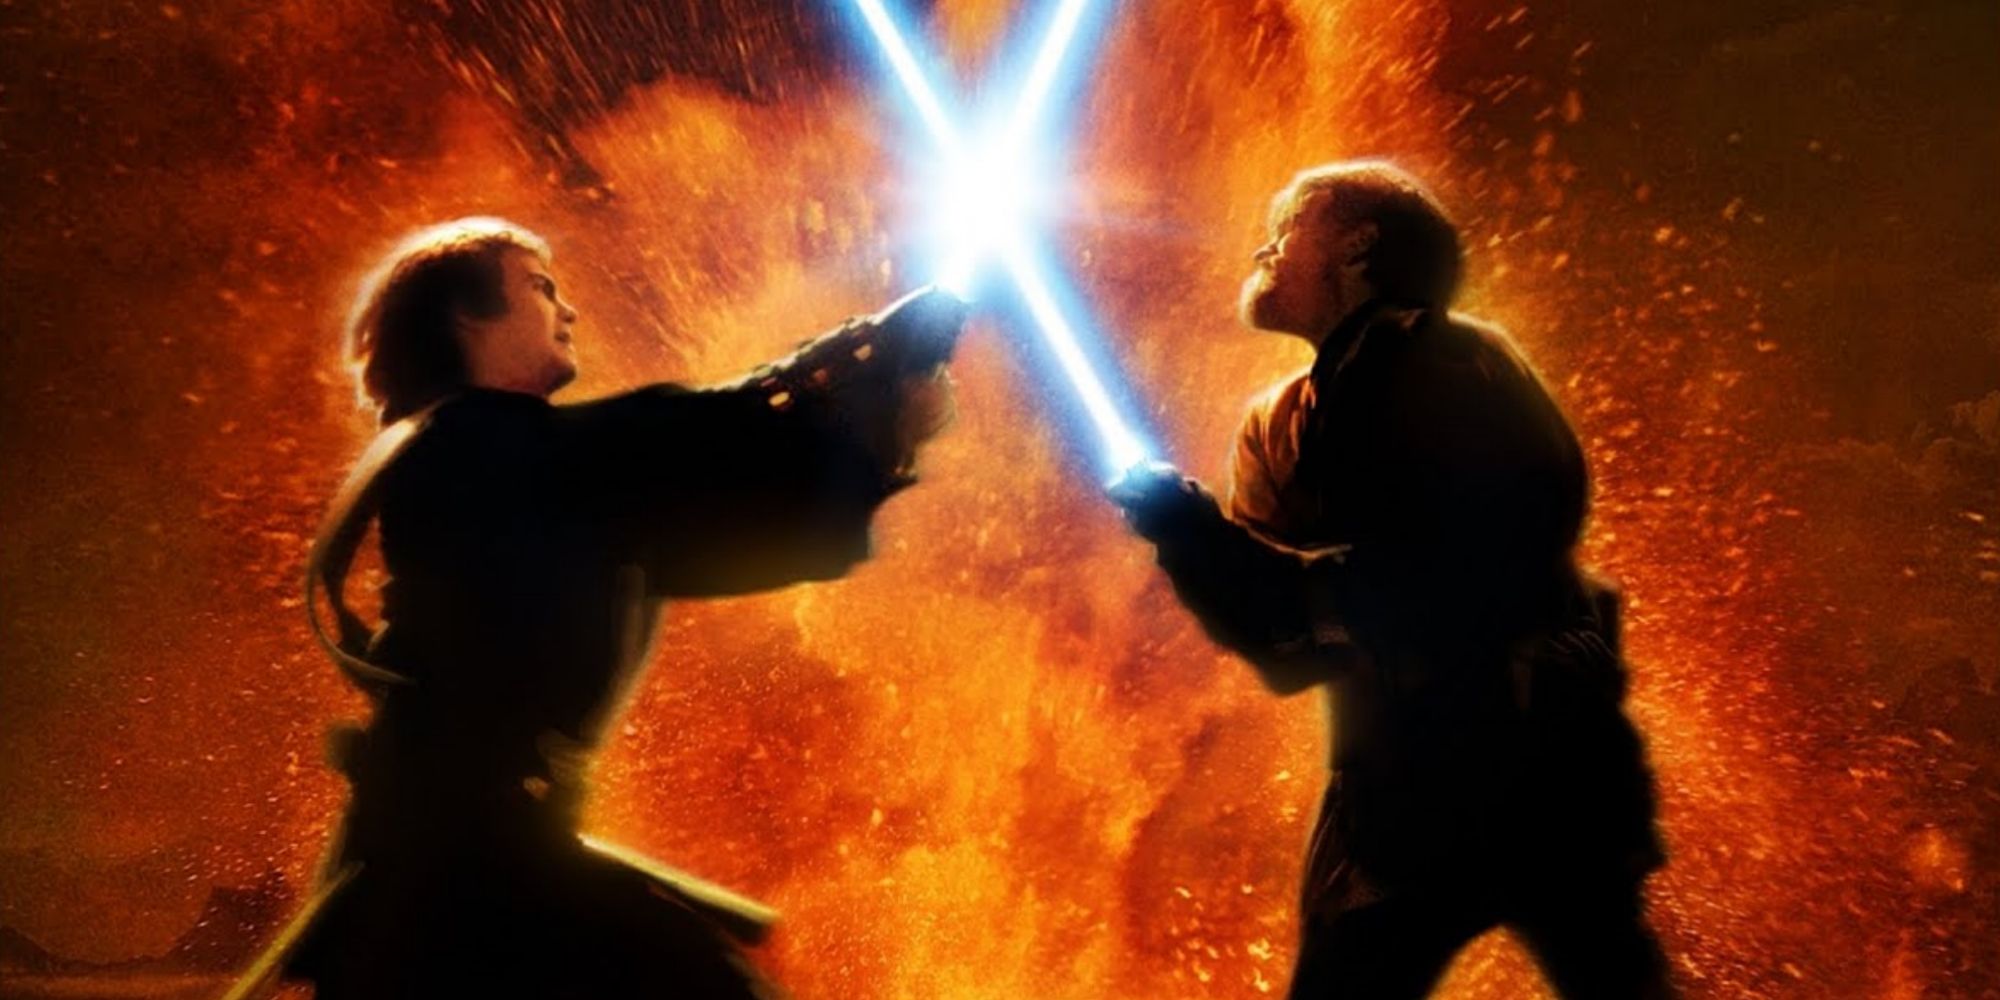 Anakin Skywalker and Obi-Wan fight on Mustafar in 'Star Wars: Episode III - Revenge of the Sith'